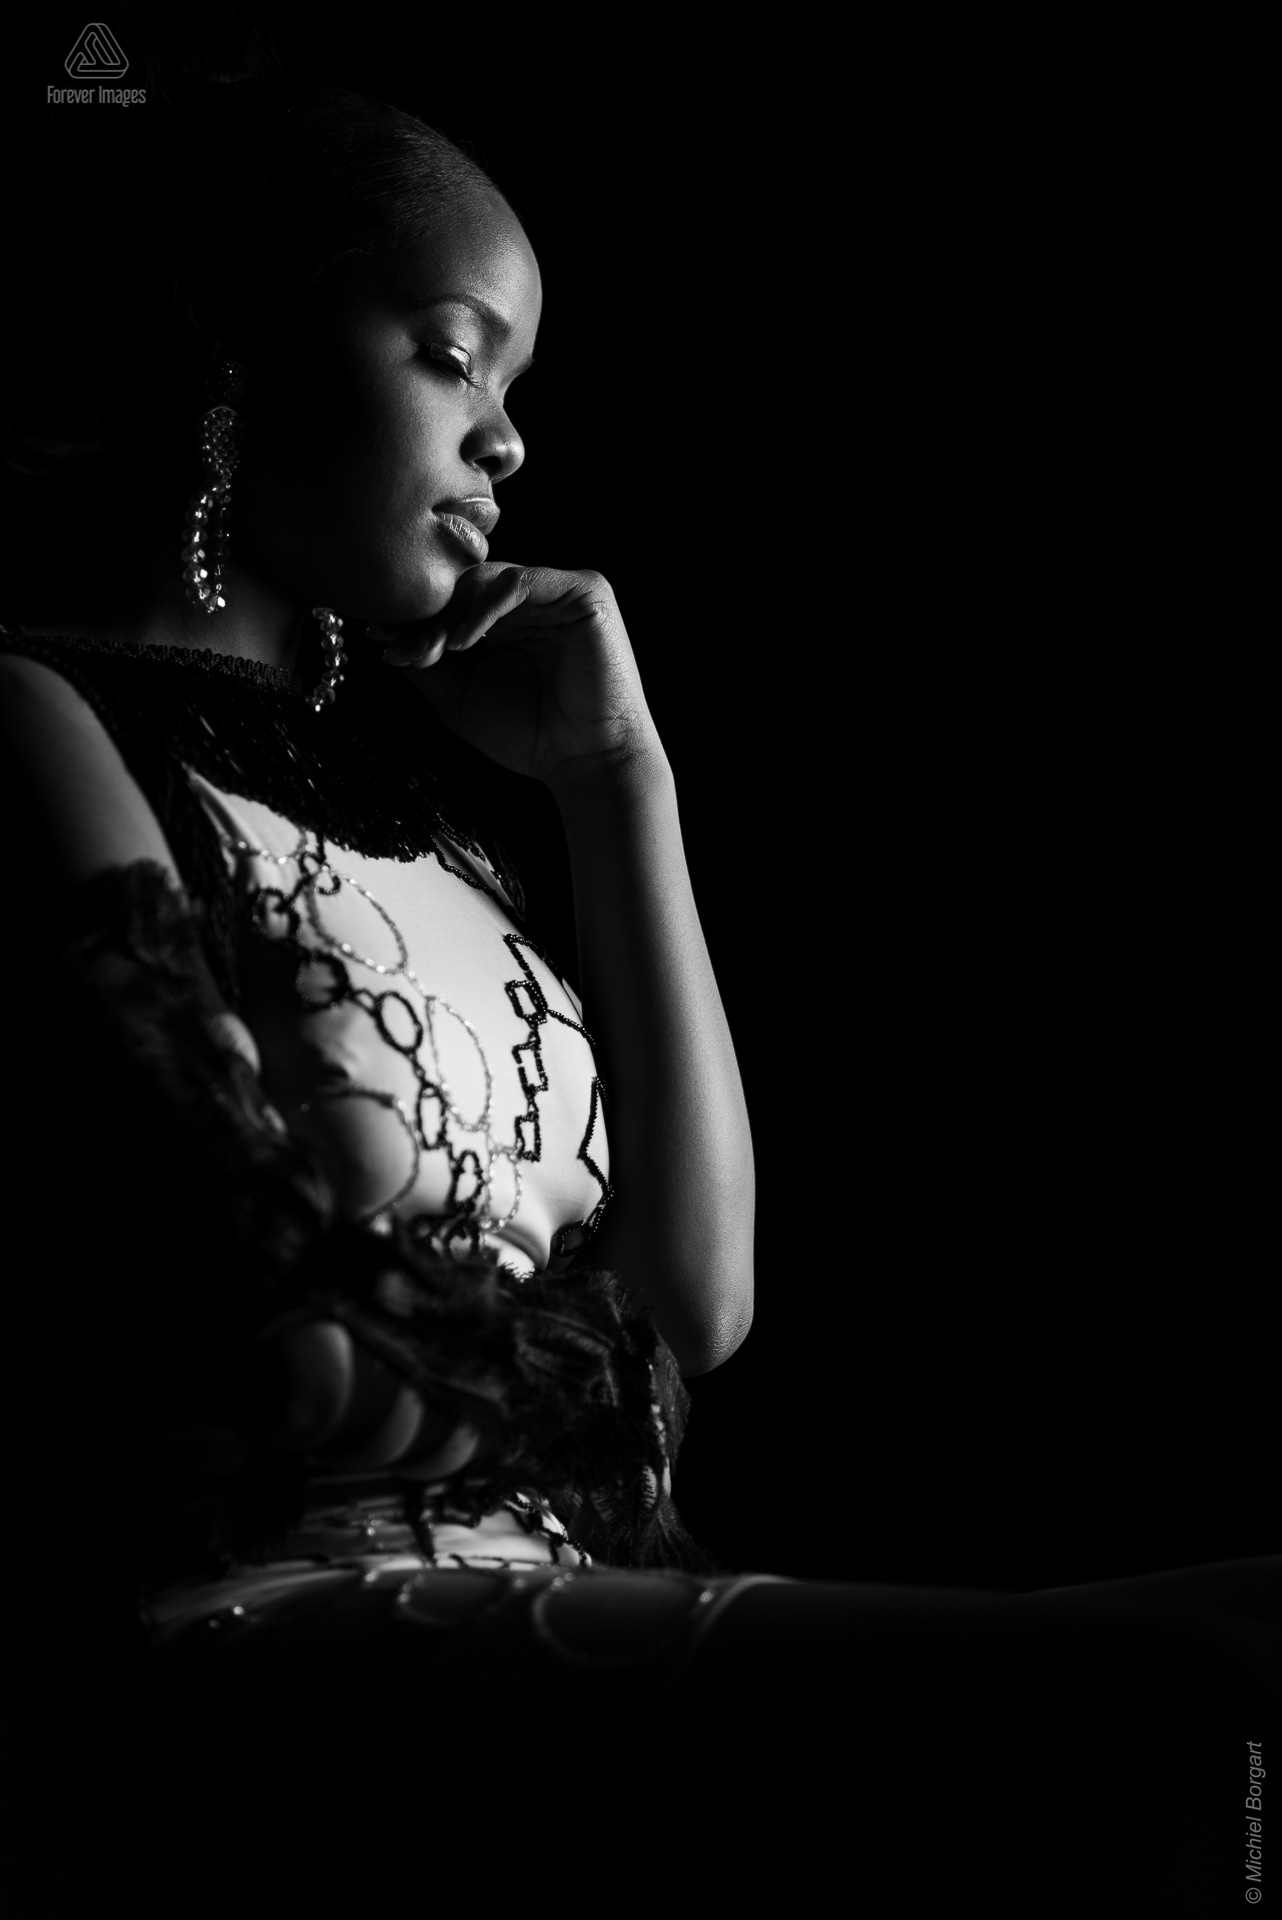 Fashion photo black and white B&W low key | Mariangel Dolorita Miss Reina Seu Ronald Rizzo Piu Colore | Fashion Photographer Michiel Borgart - Forever Images.